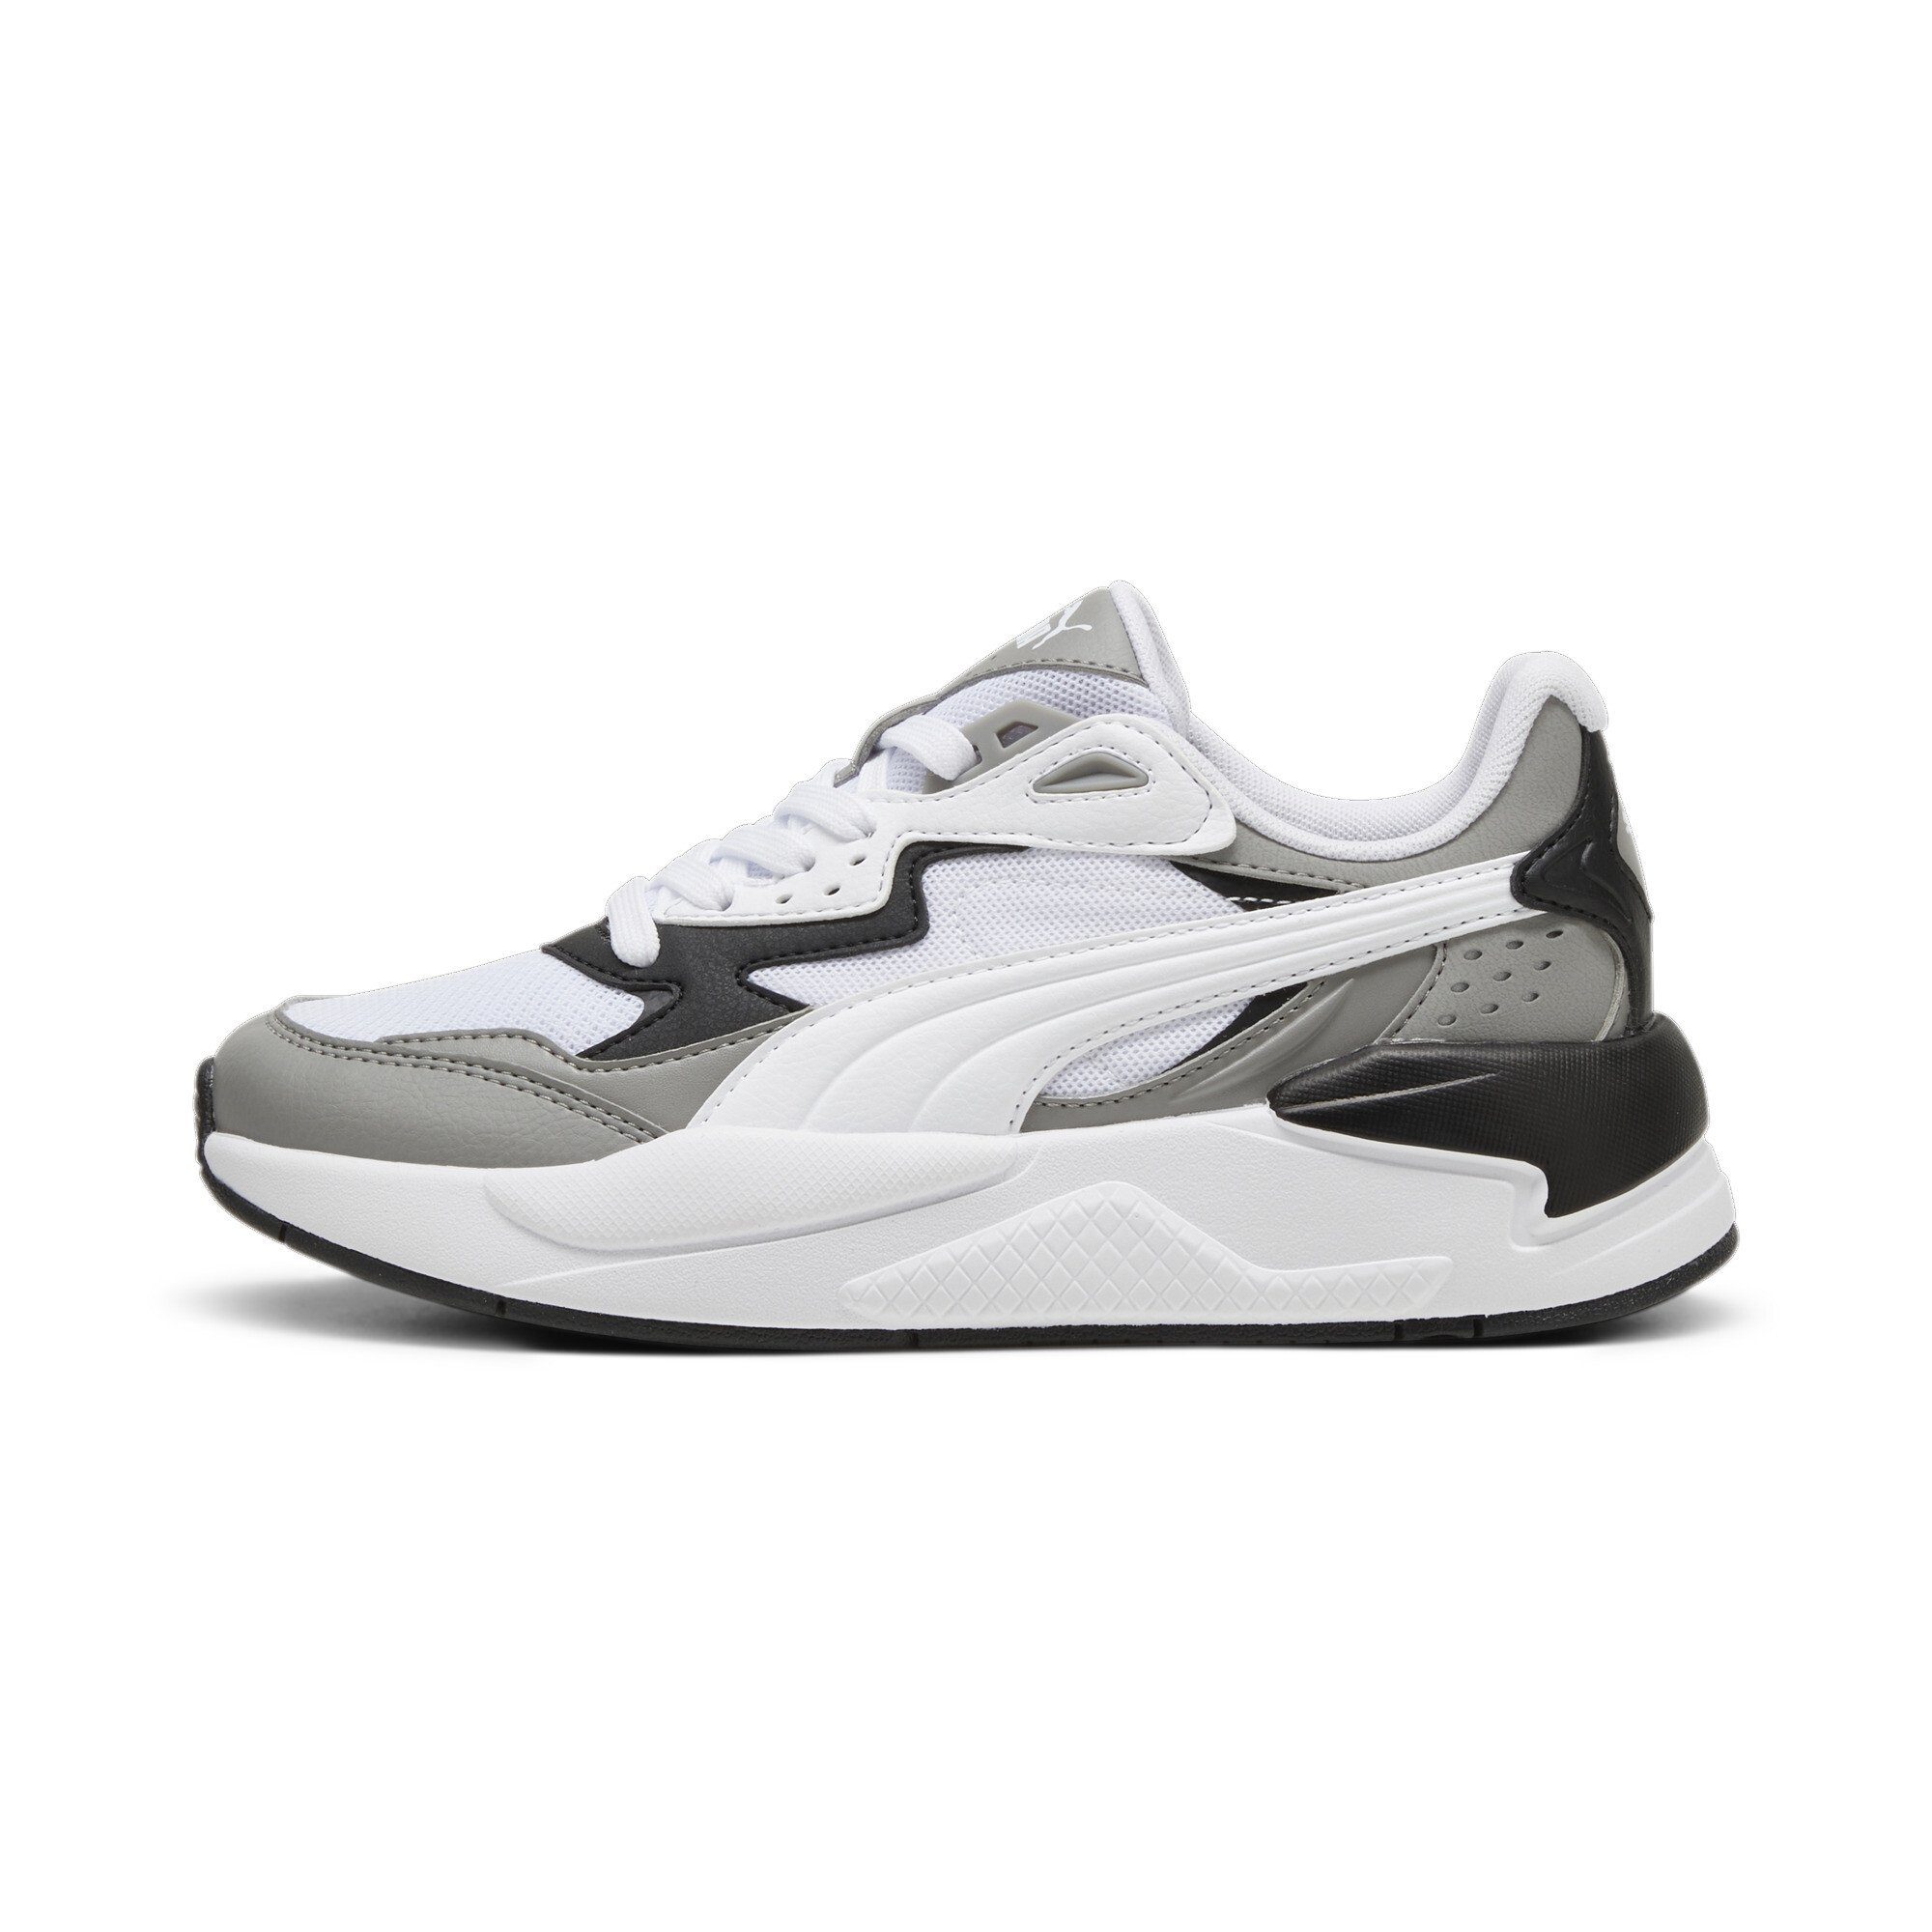 PUMA X-Ray Speed Stormy White Jugendliche Black Slate Sneakers Sneaker Gray